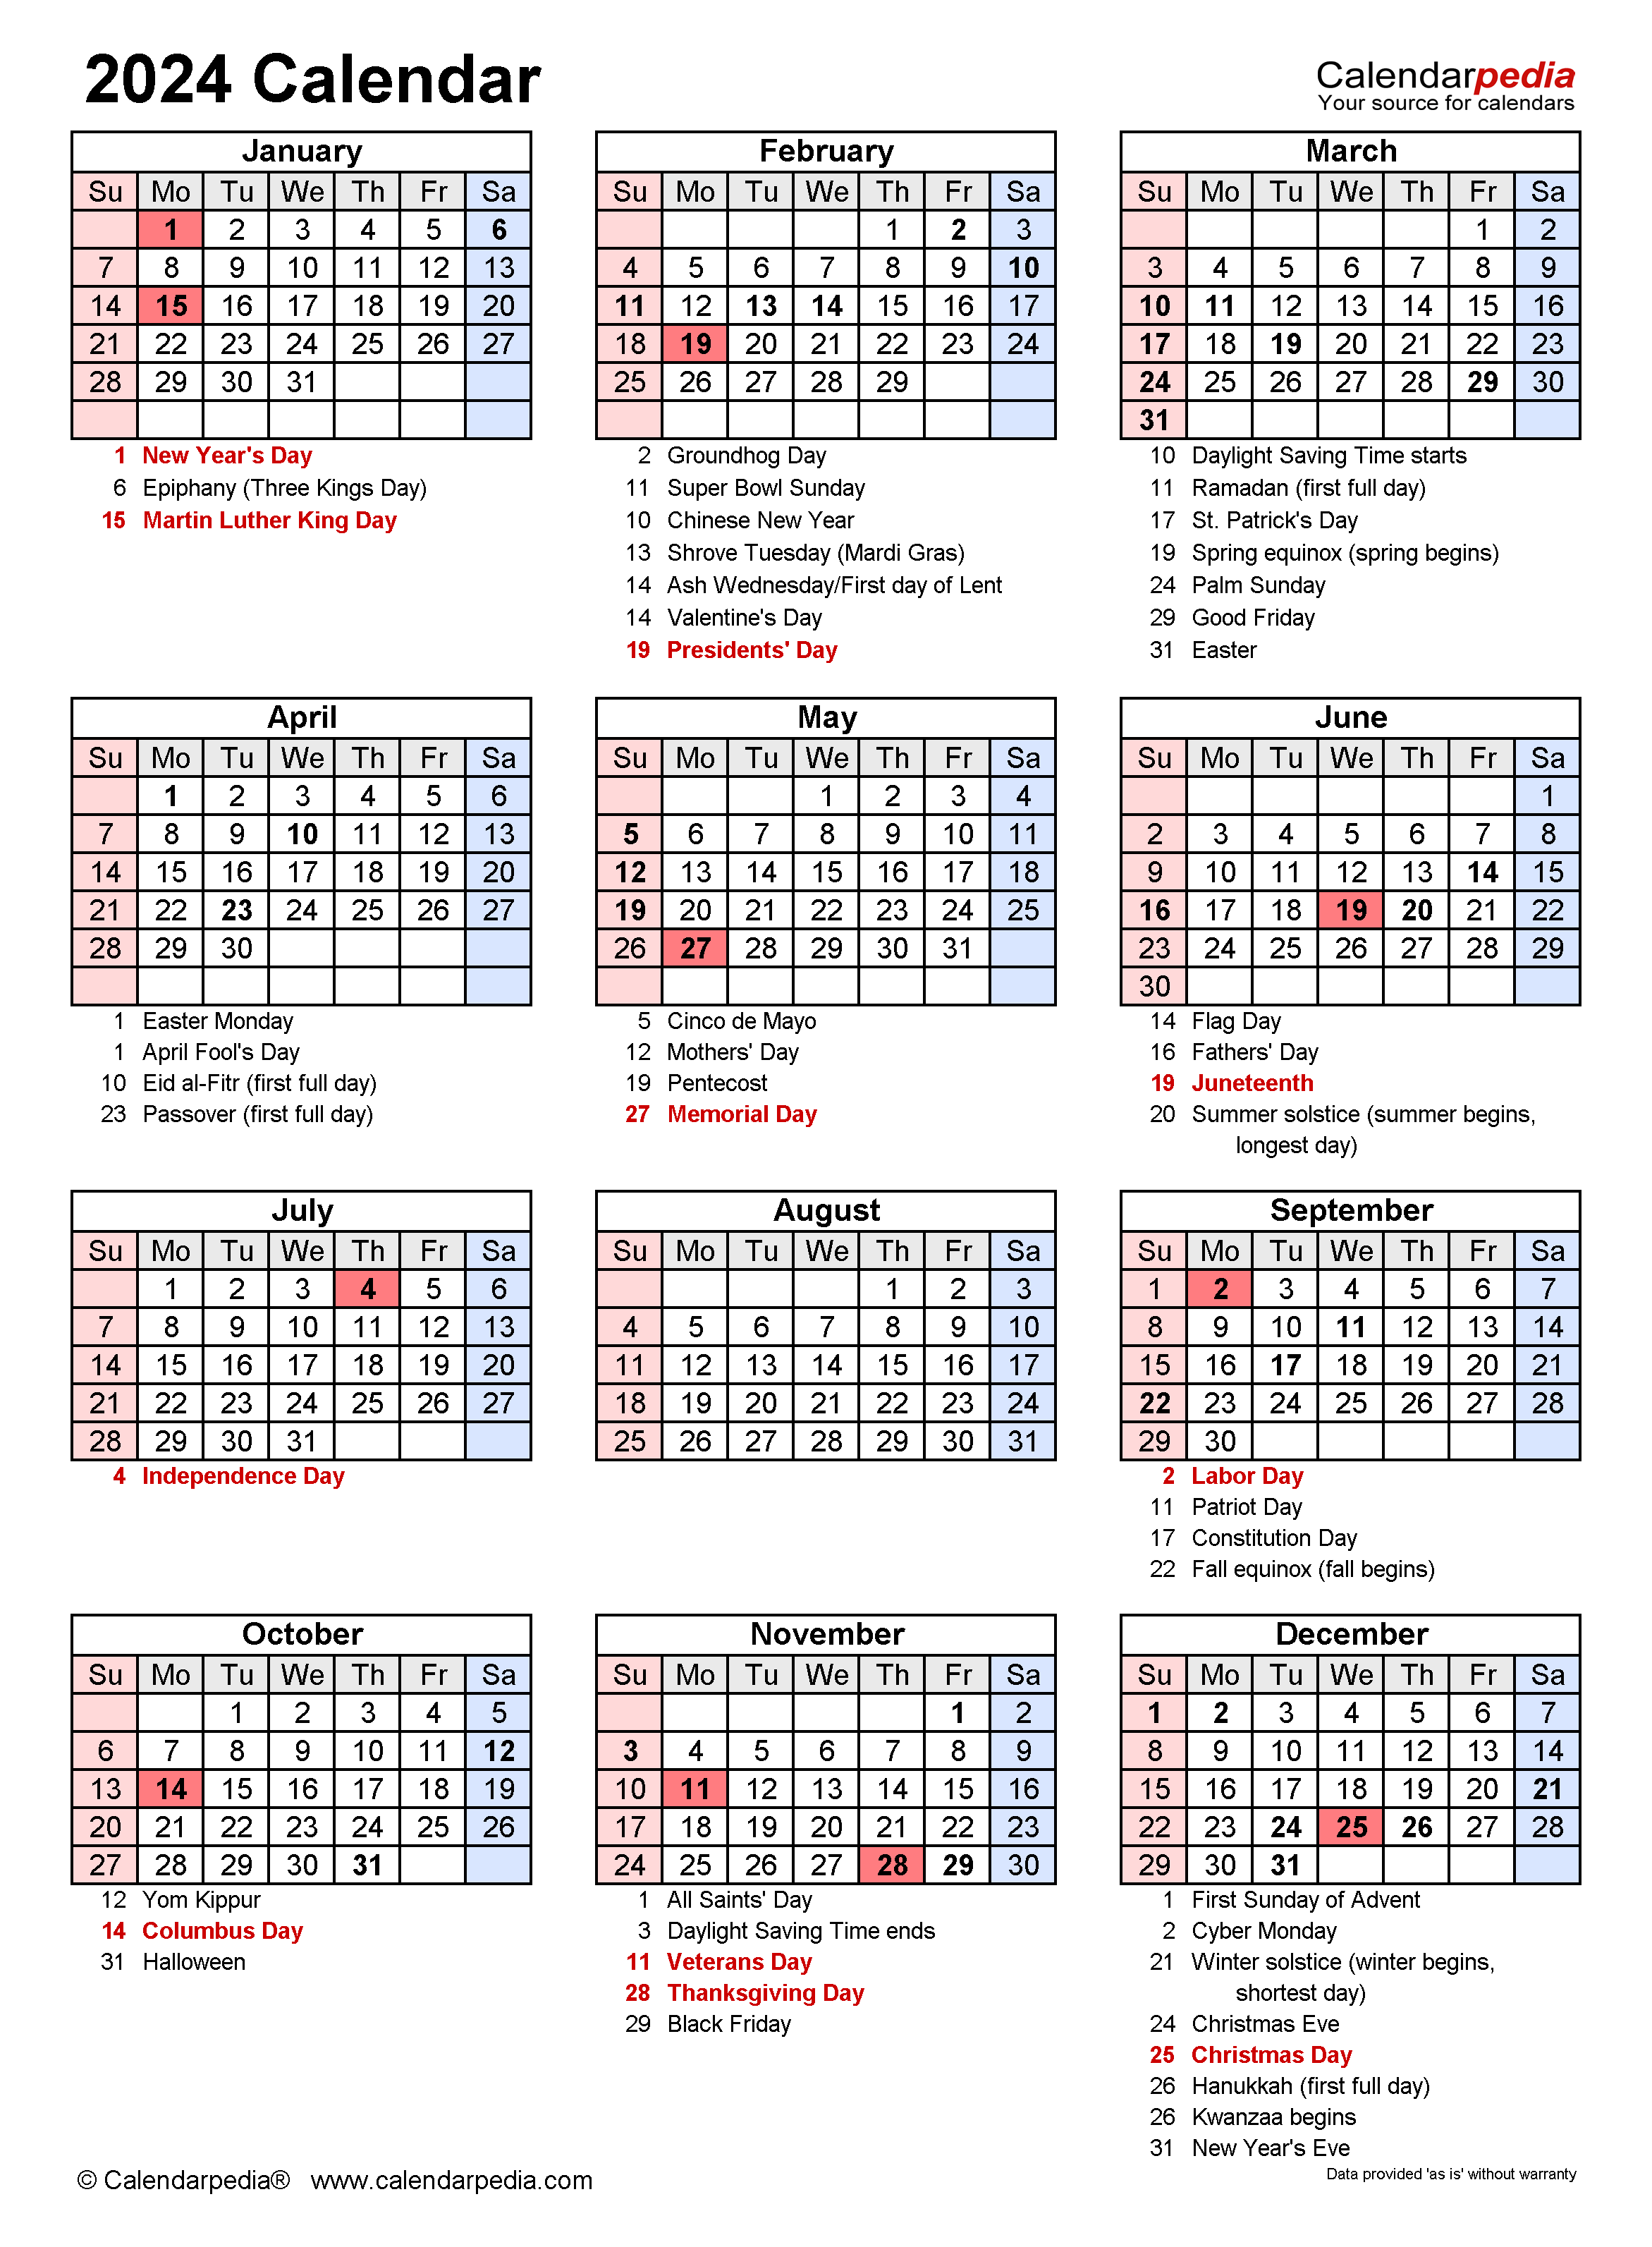 2024 Calendar Free Printable PDF Templates Calendarpedia - Free Printable 2024 Yearly Calendar With Holidays Pdf